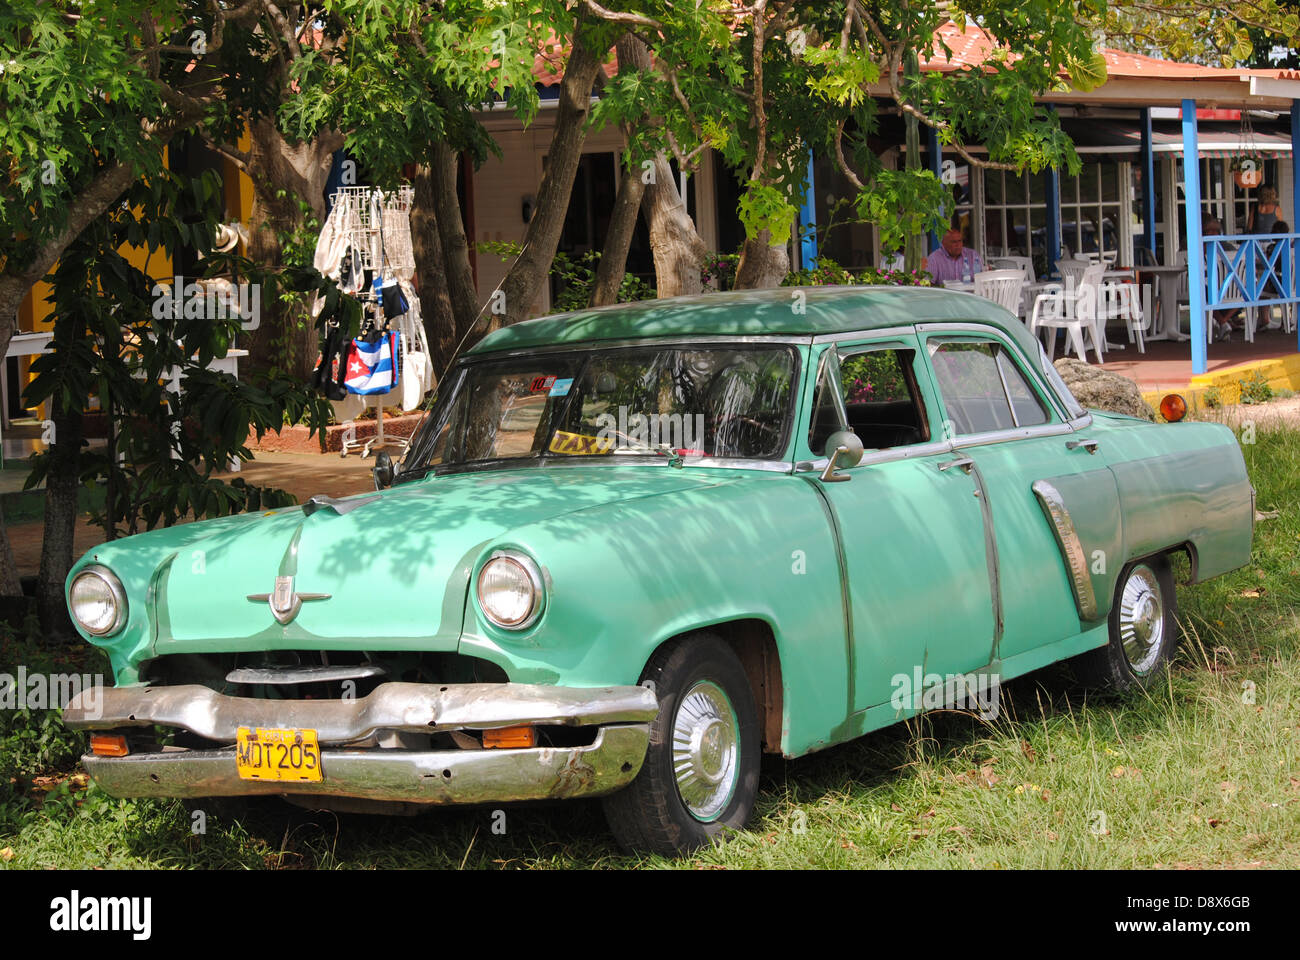 Classic American car in Cuba Stock Photo